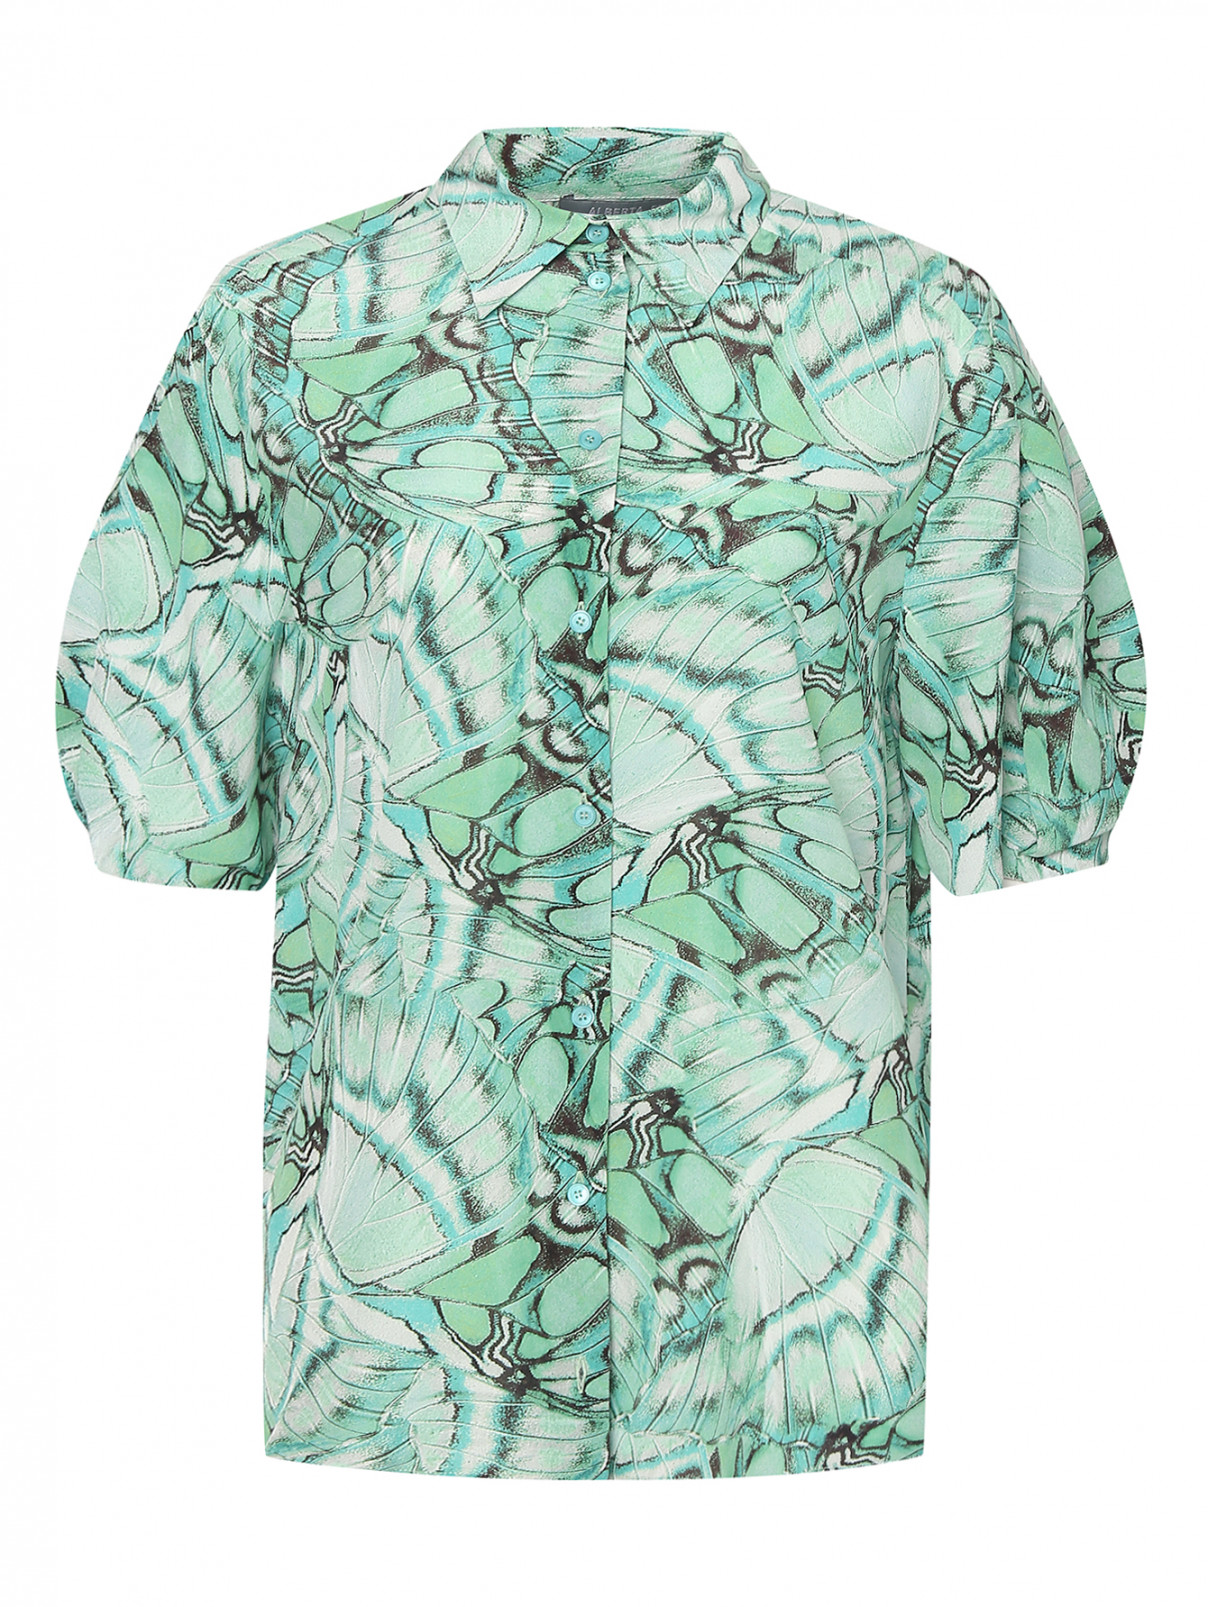 Блуза из шелка с узором Alberta Ferretti  –  Общий вид  – Цвет:  Зеленый